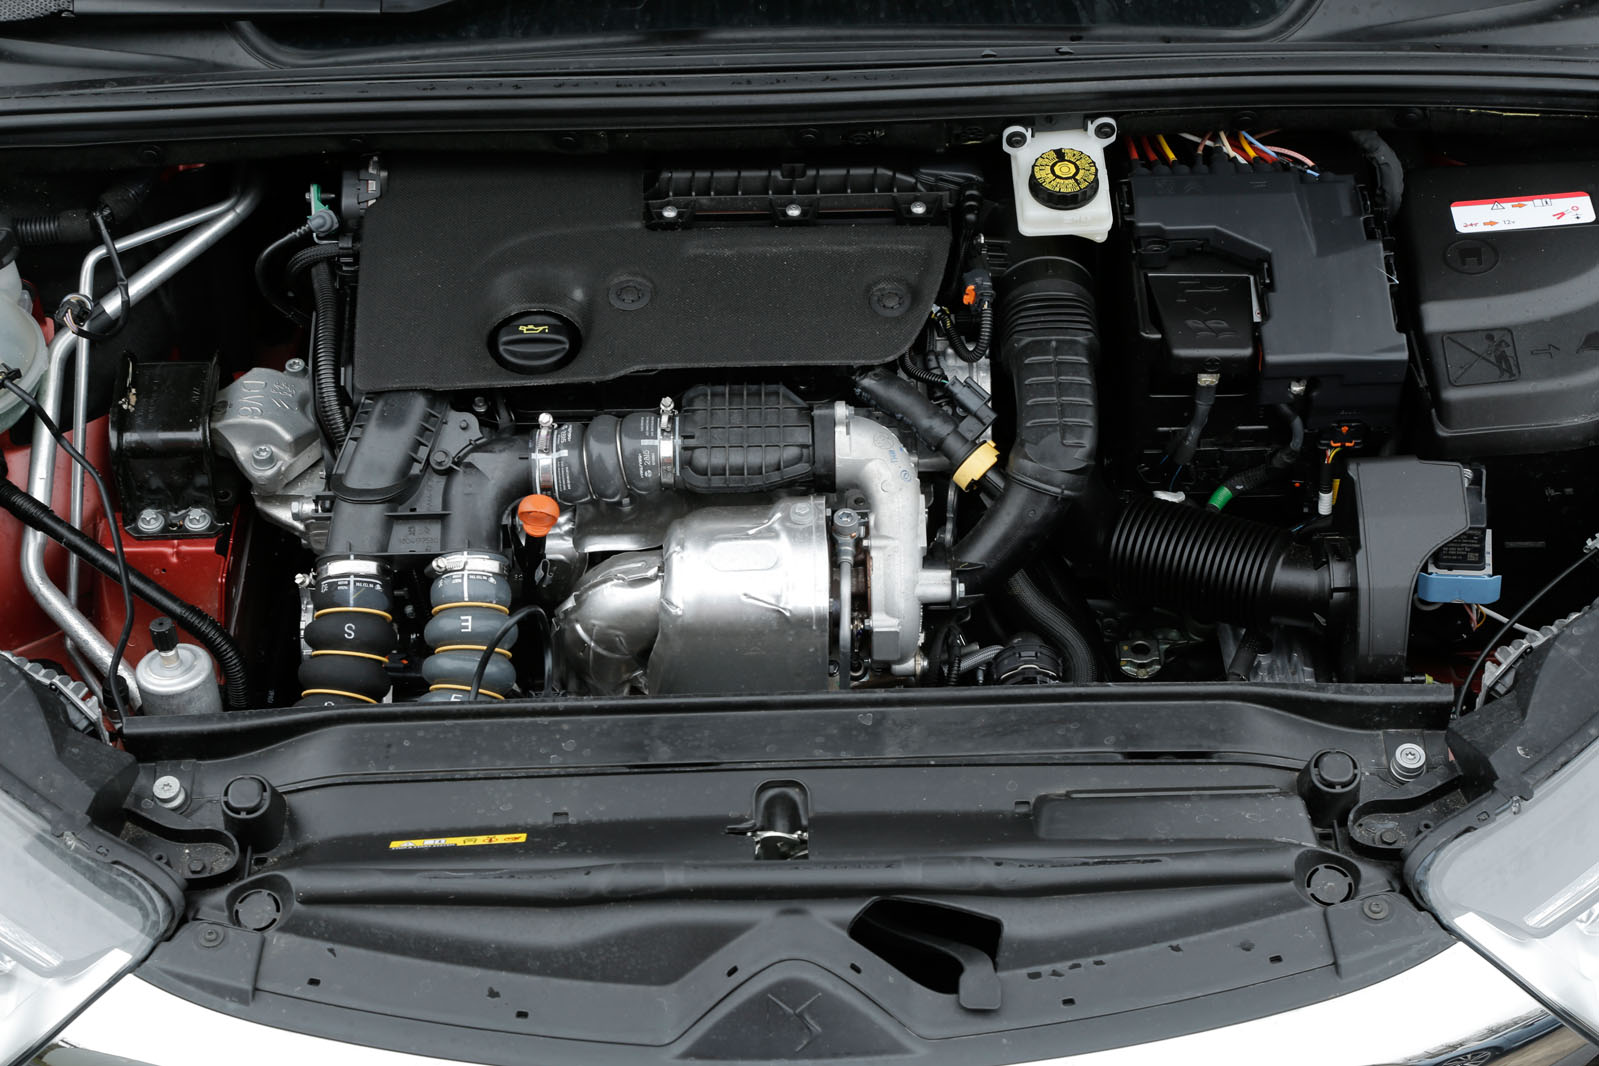 The DS 4 Crossback's 1.6-litre diesel engine